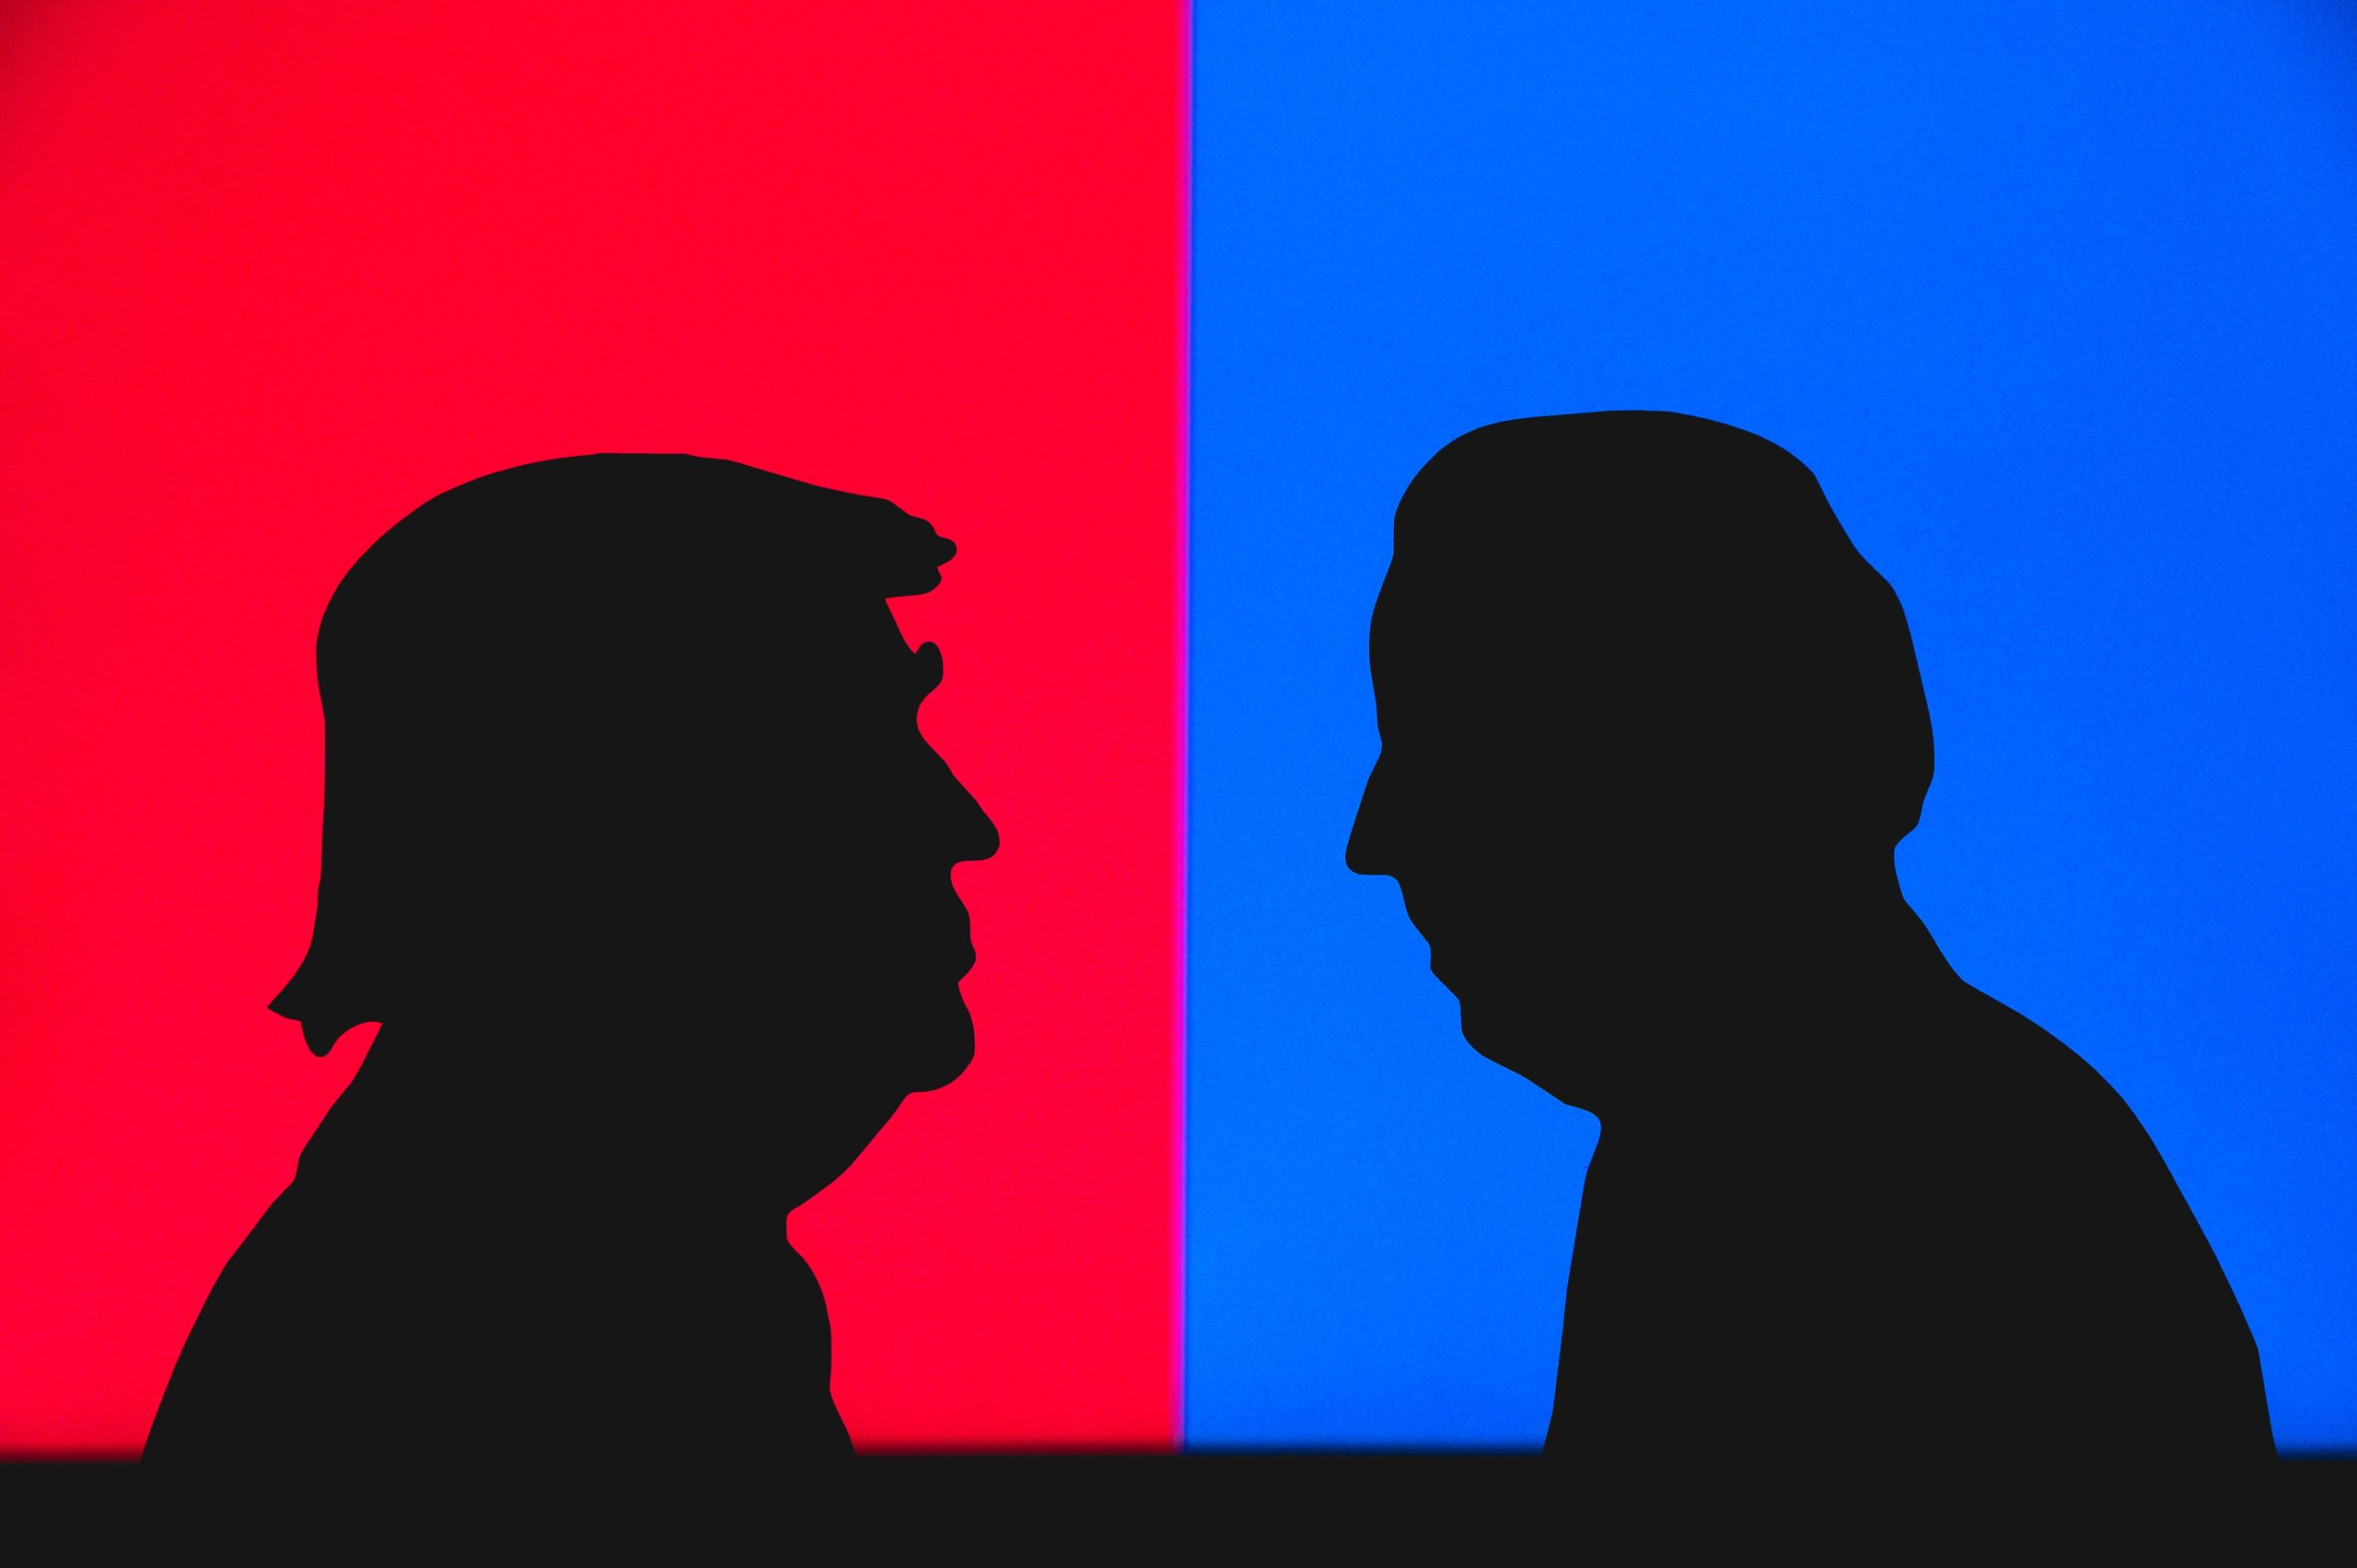 Silhouettes of Donald Trump and Joe Biden